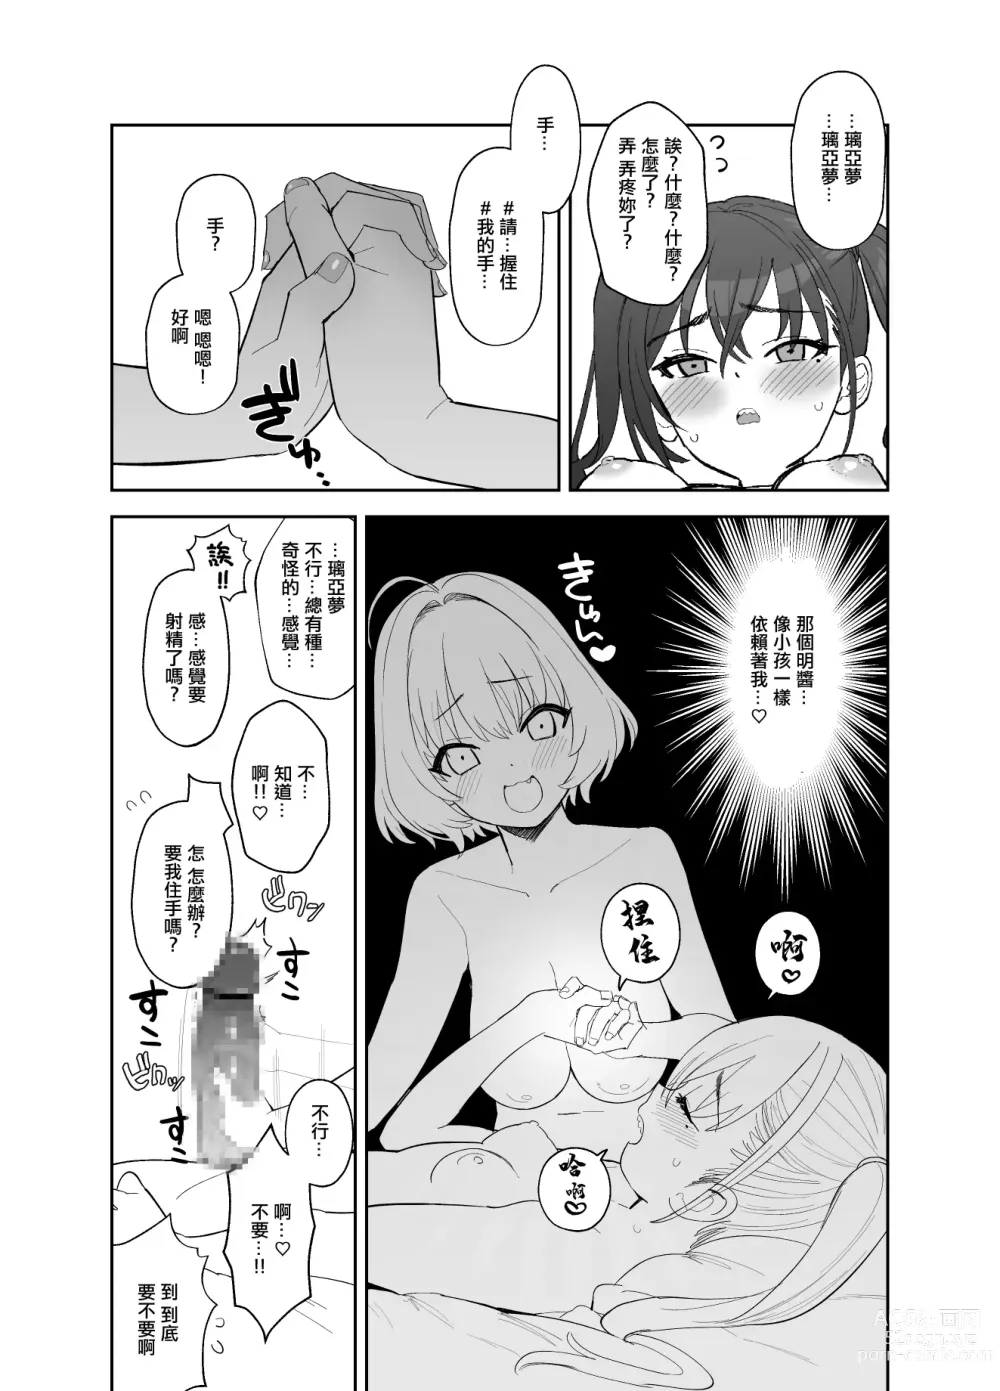 Page 6 of doujinshi 明長出了肉棒與璃亞夢做愛的漫畫